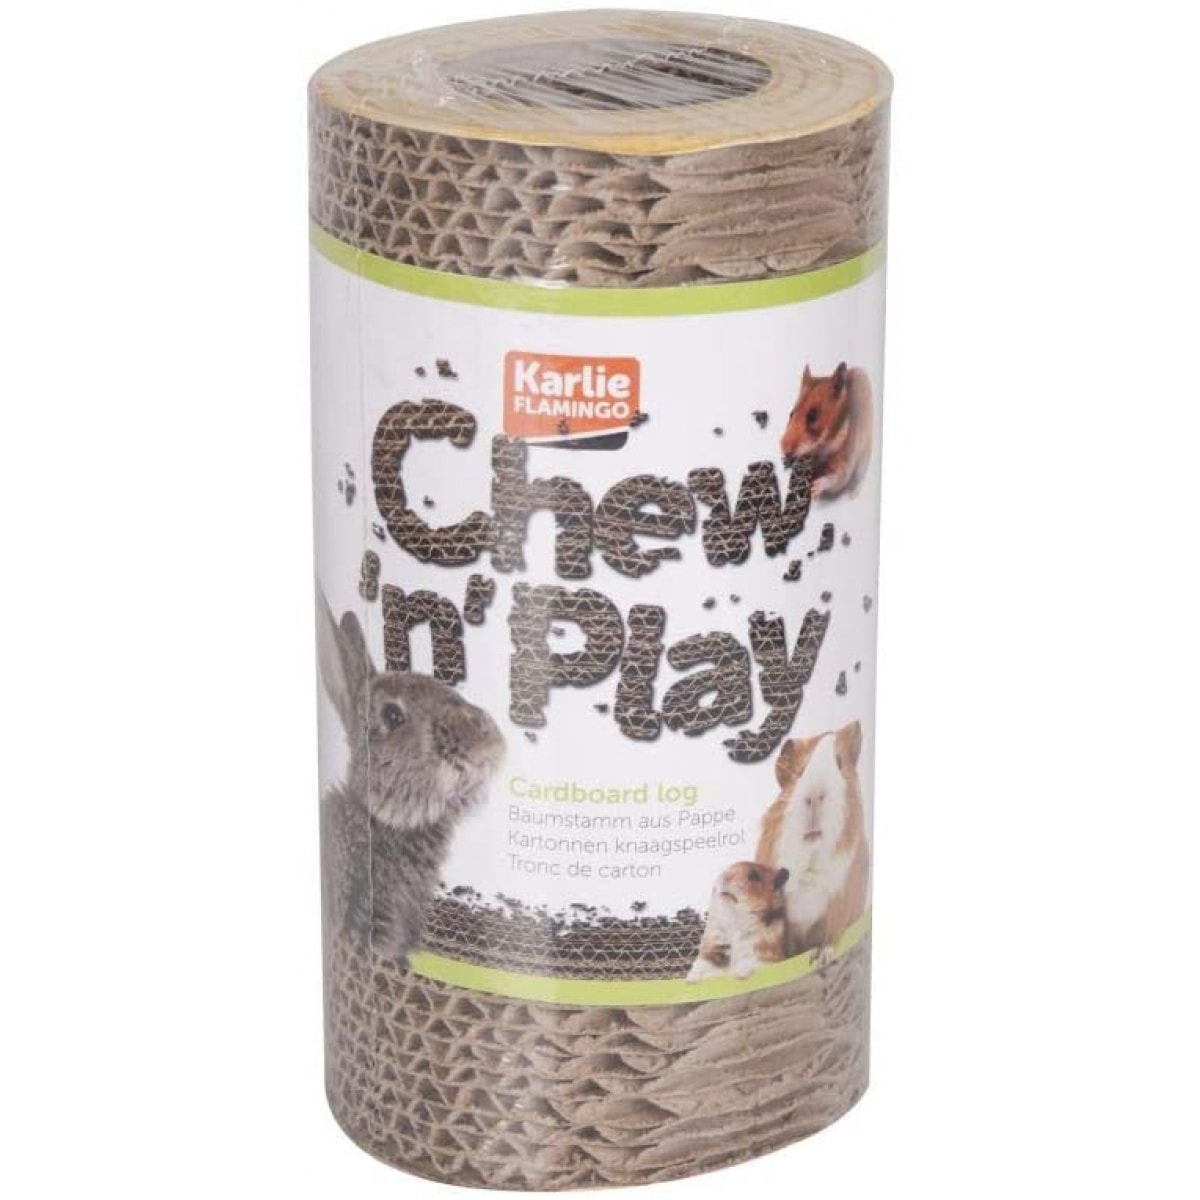 Chew 'N' Play Cardboard Log Product Image